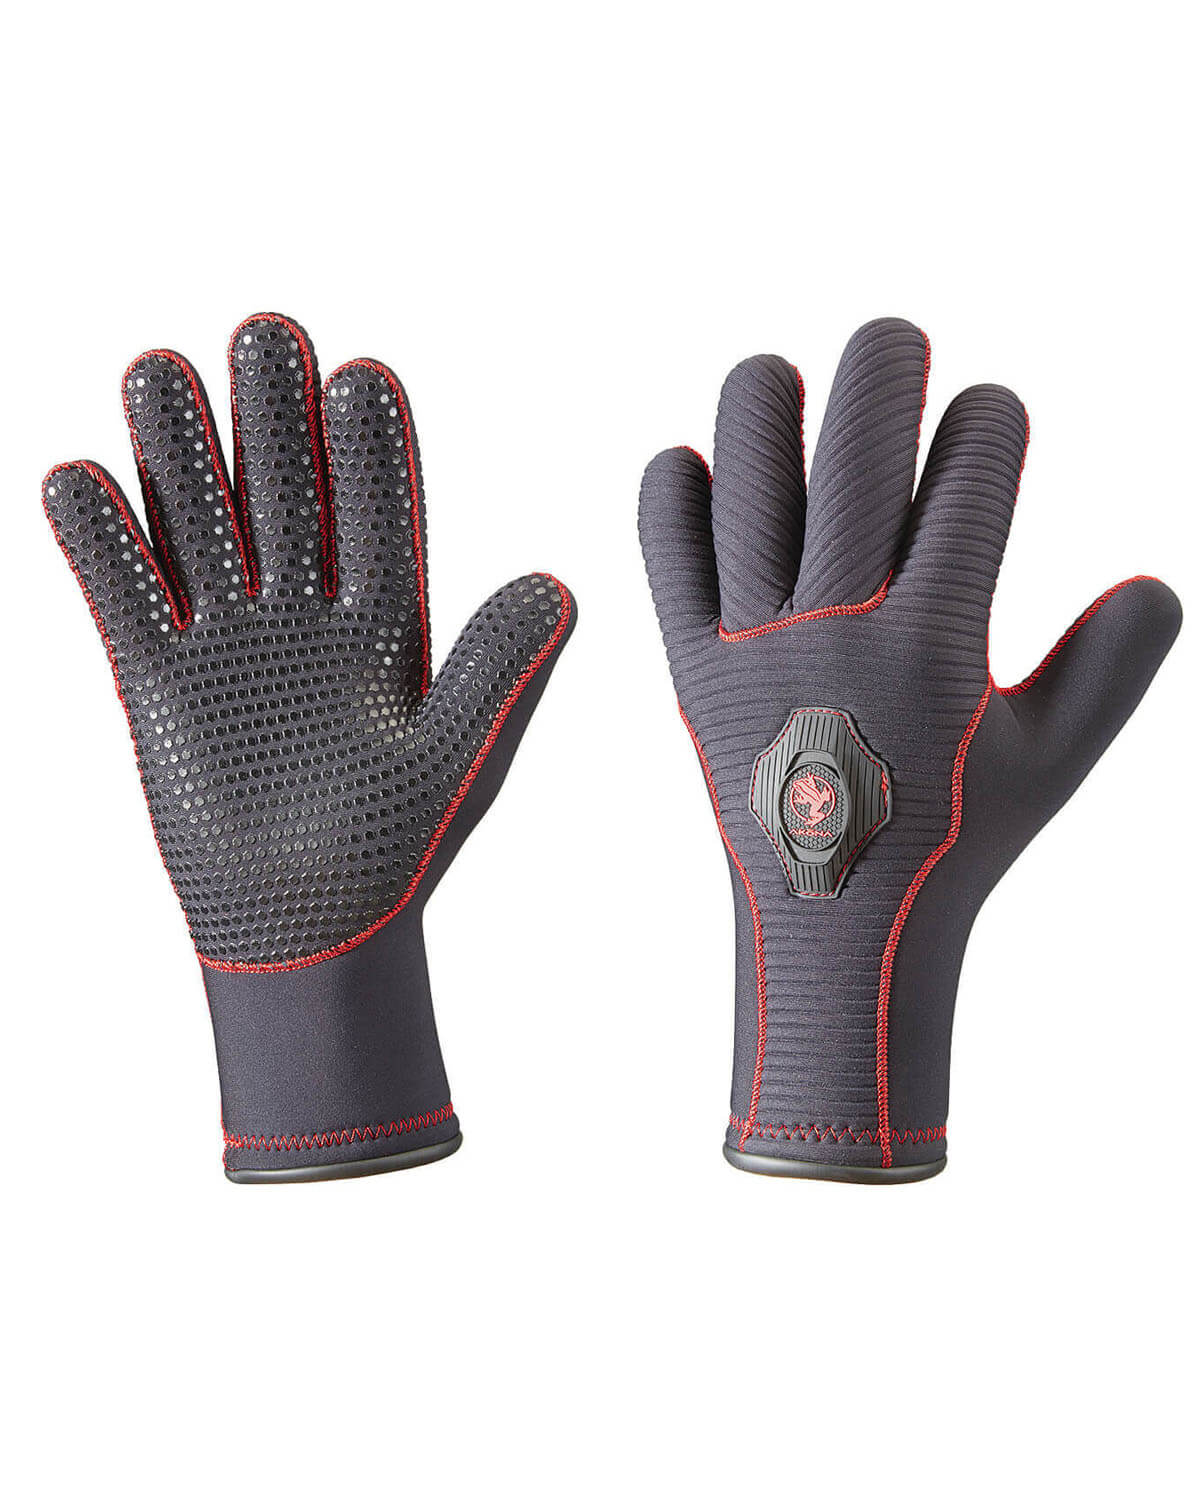 5mm AKONA Standard Wetsuit Gloves